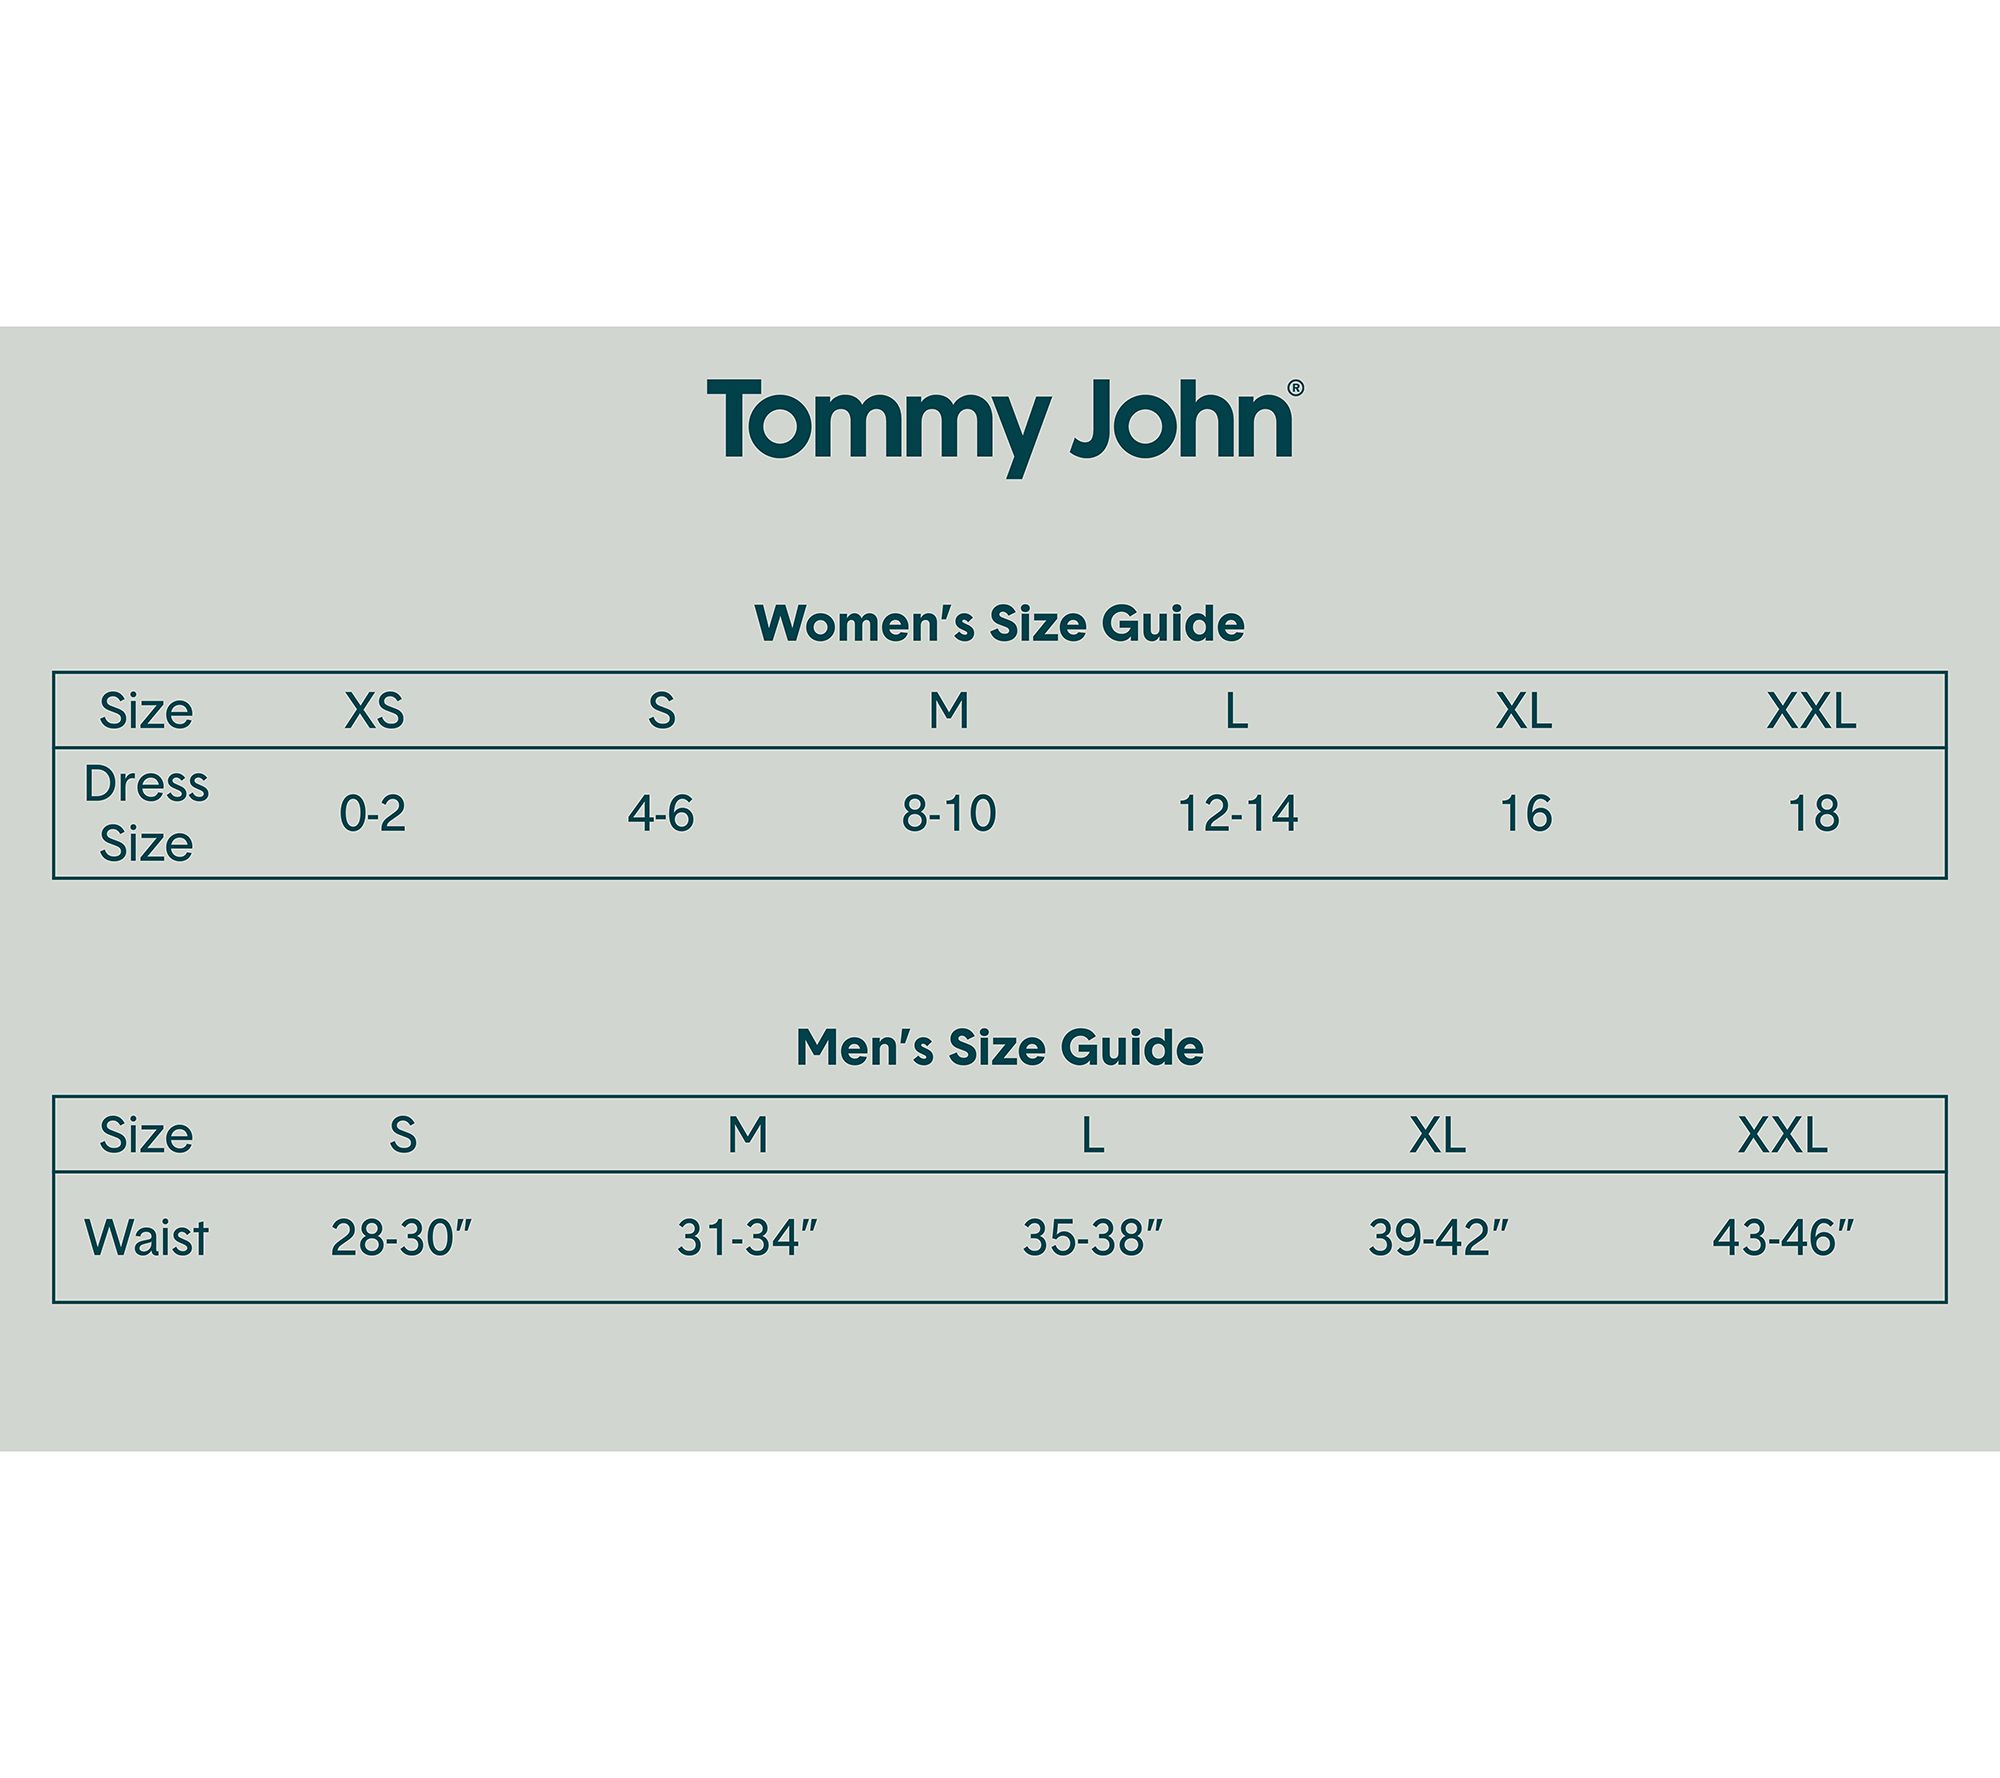 tommy john underwear sizes